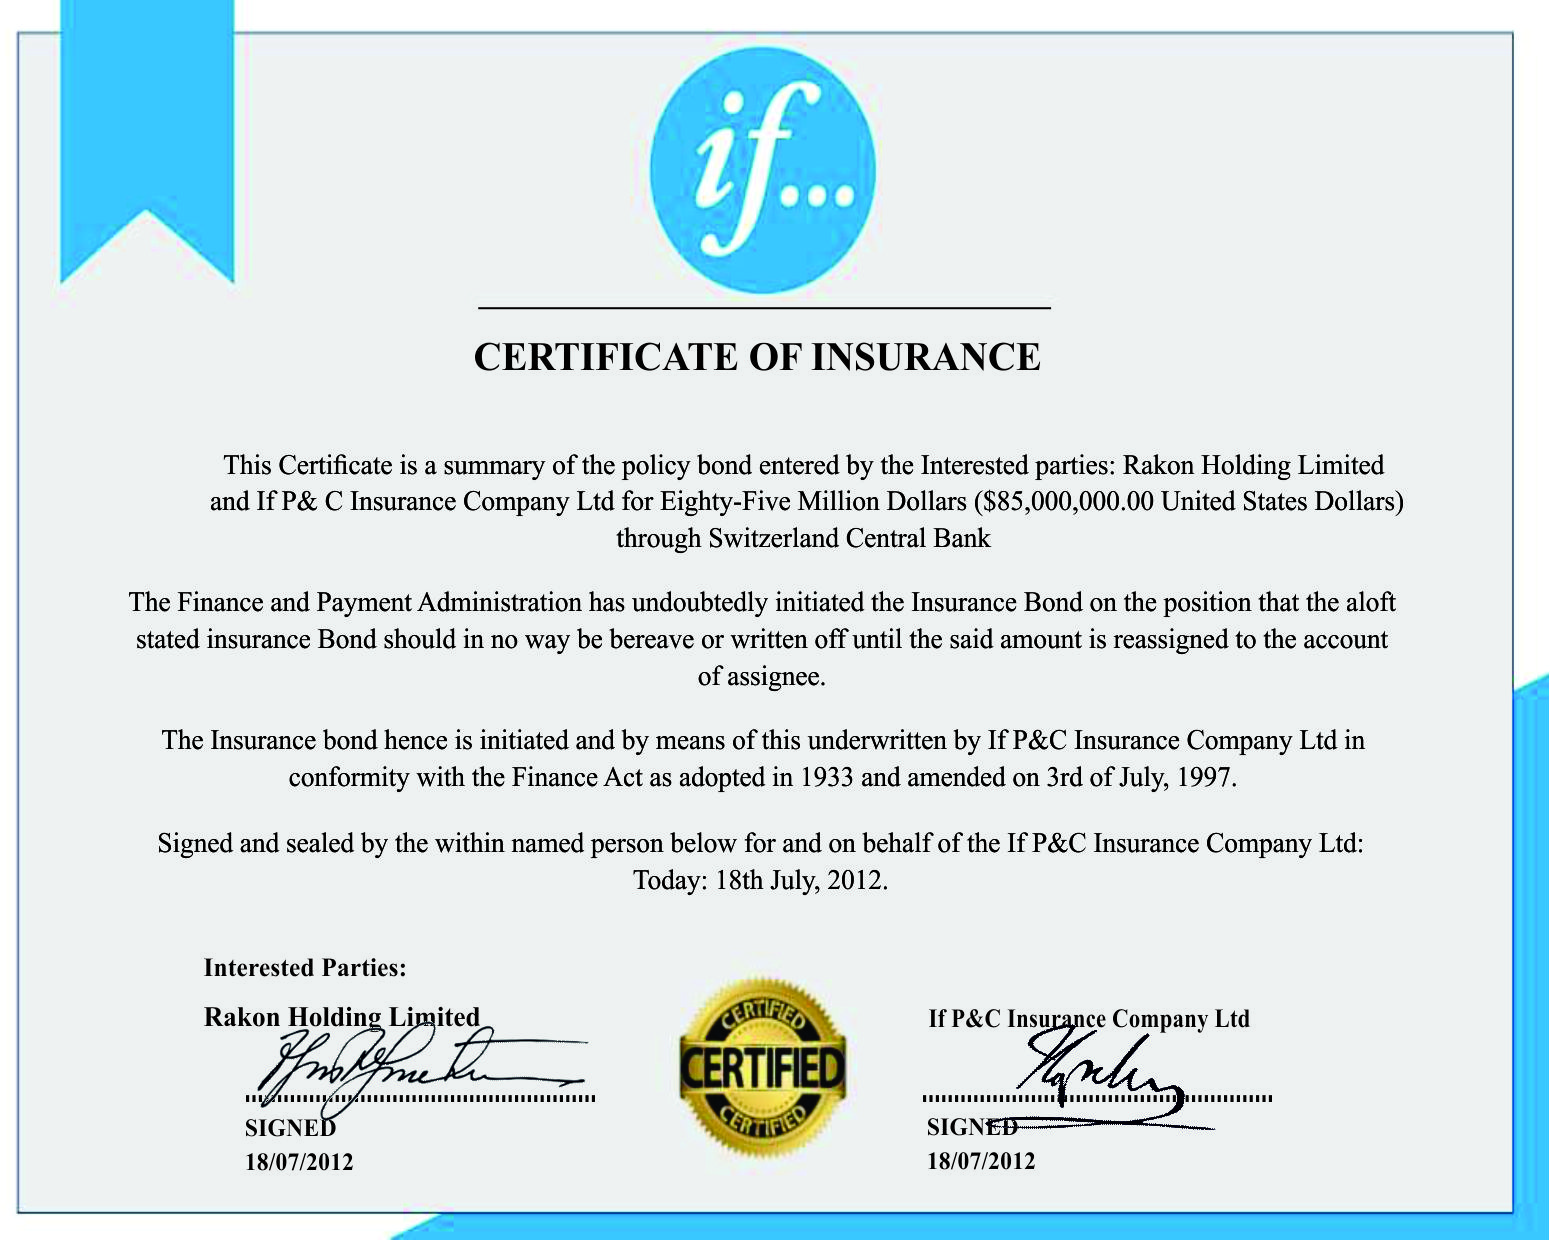 Rakon Holding Limited certificate